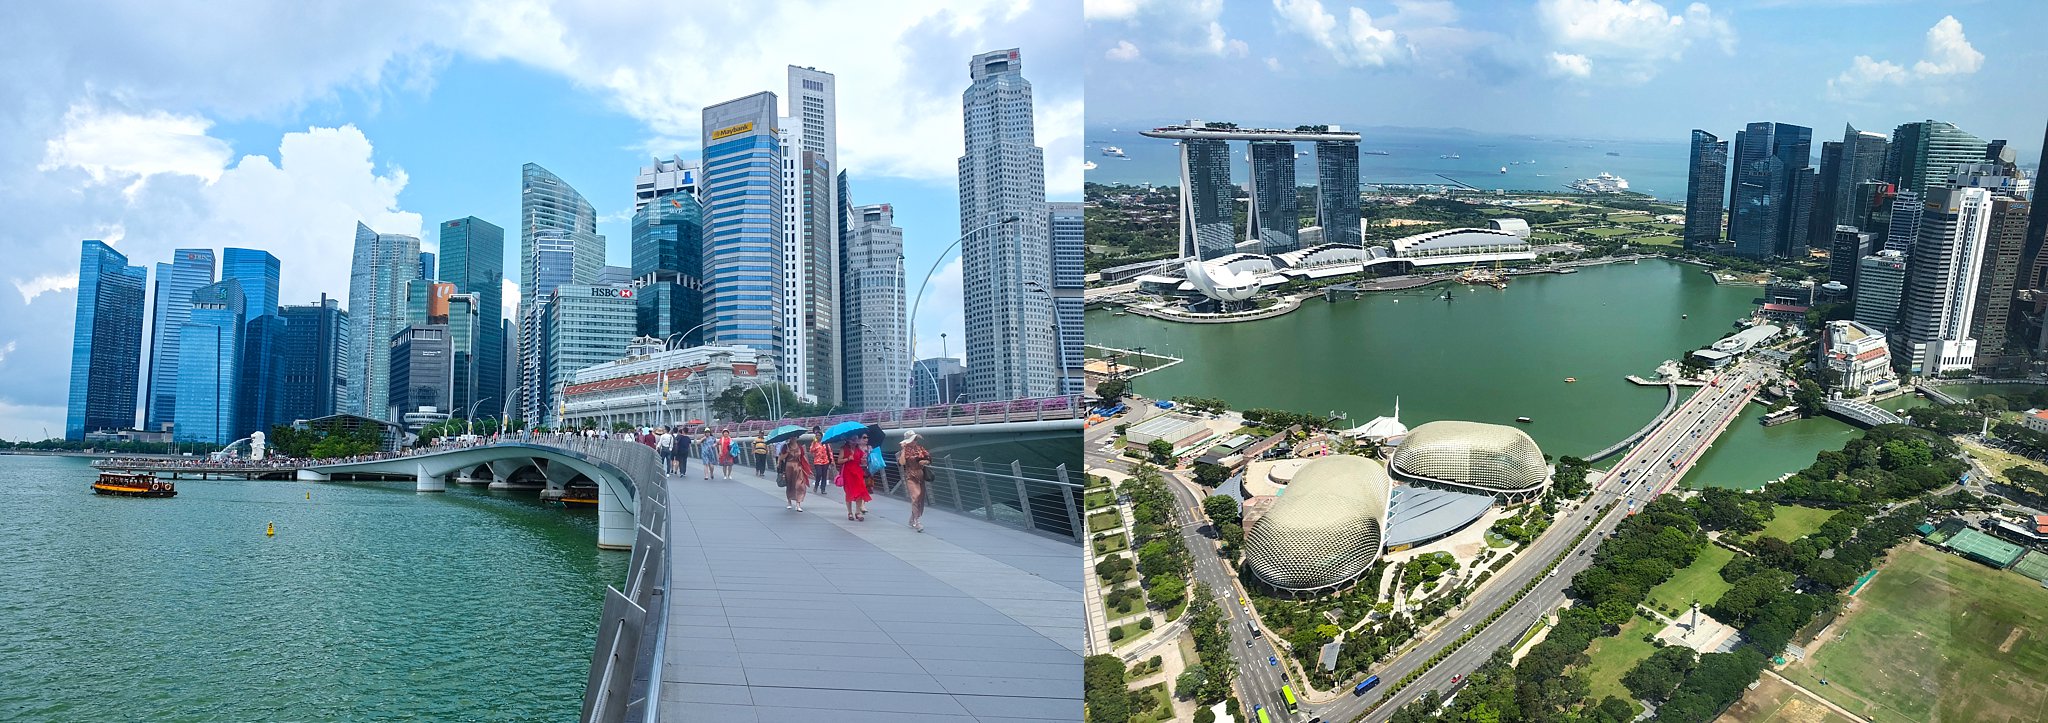 Marina Bay, Singapore (taken with iPhone 8 & Fujifilm XT2)